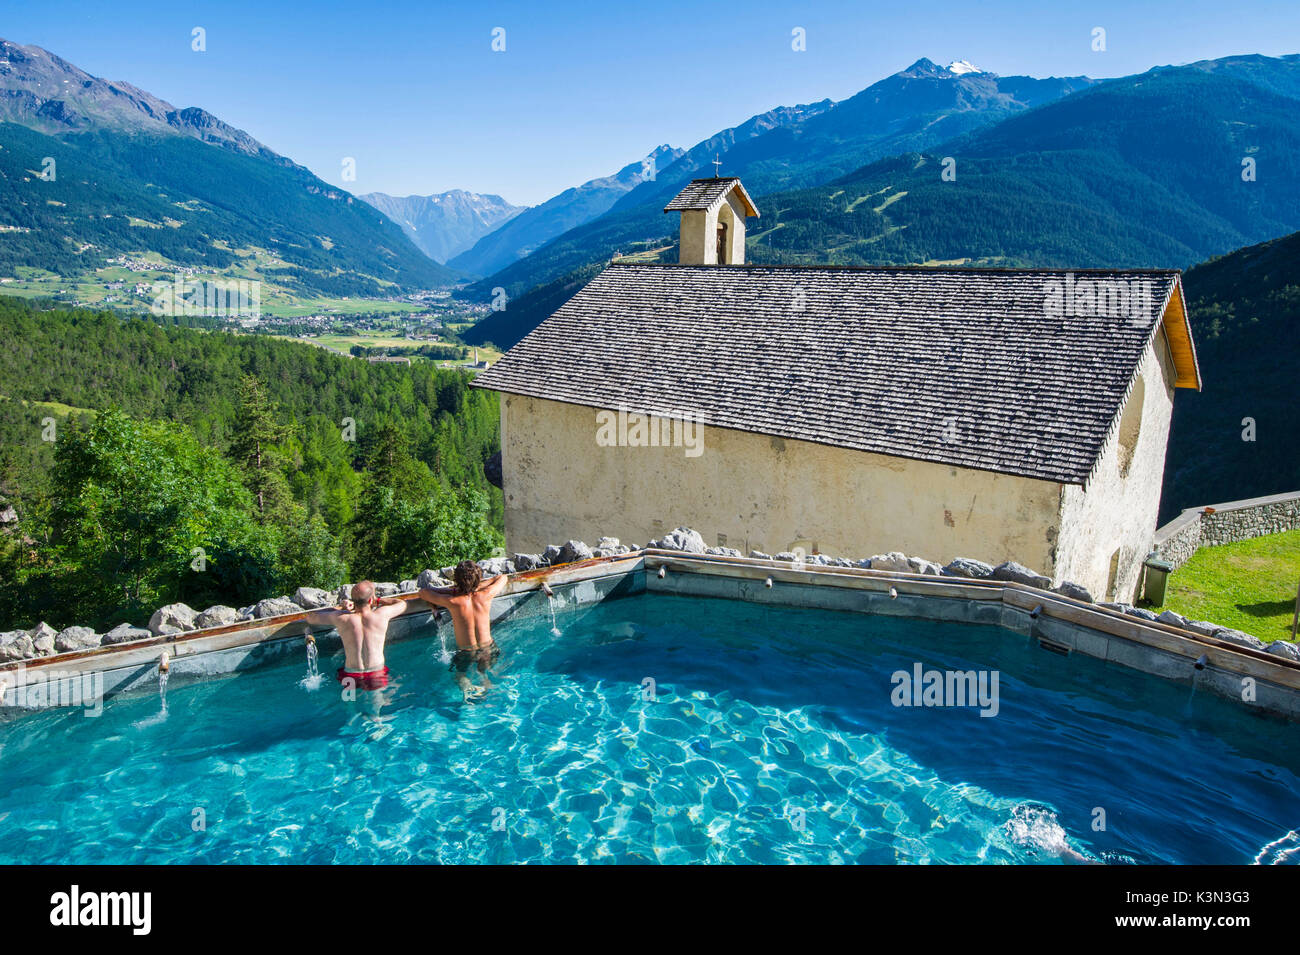 Bagni Vecchi, Bormio, Livigno, Lombardei, Italien. Wellness Center mit offenen Vista mit der alpinen Landschaft. Stockfoto